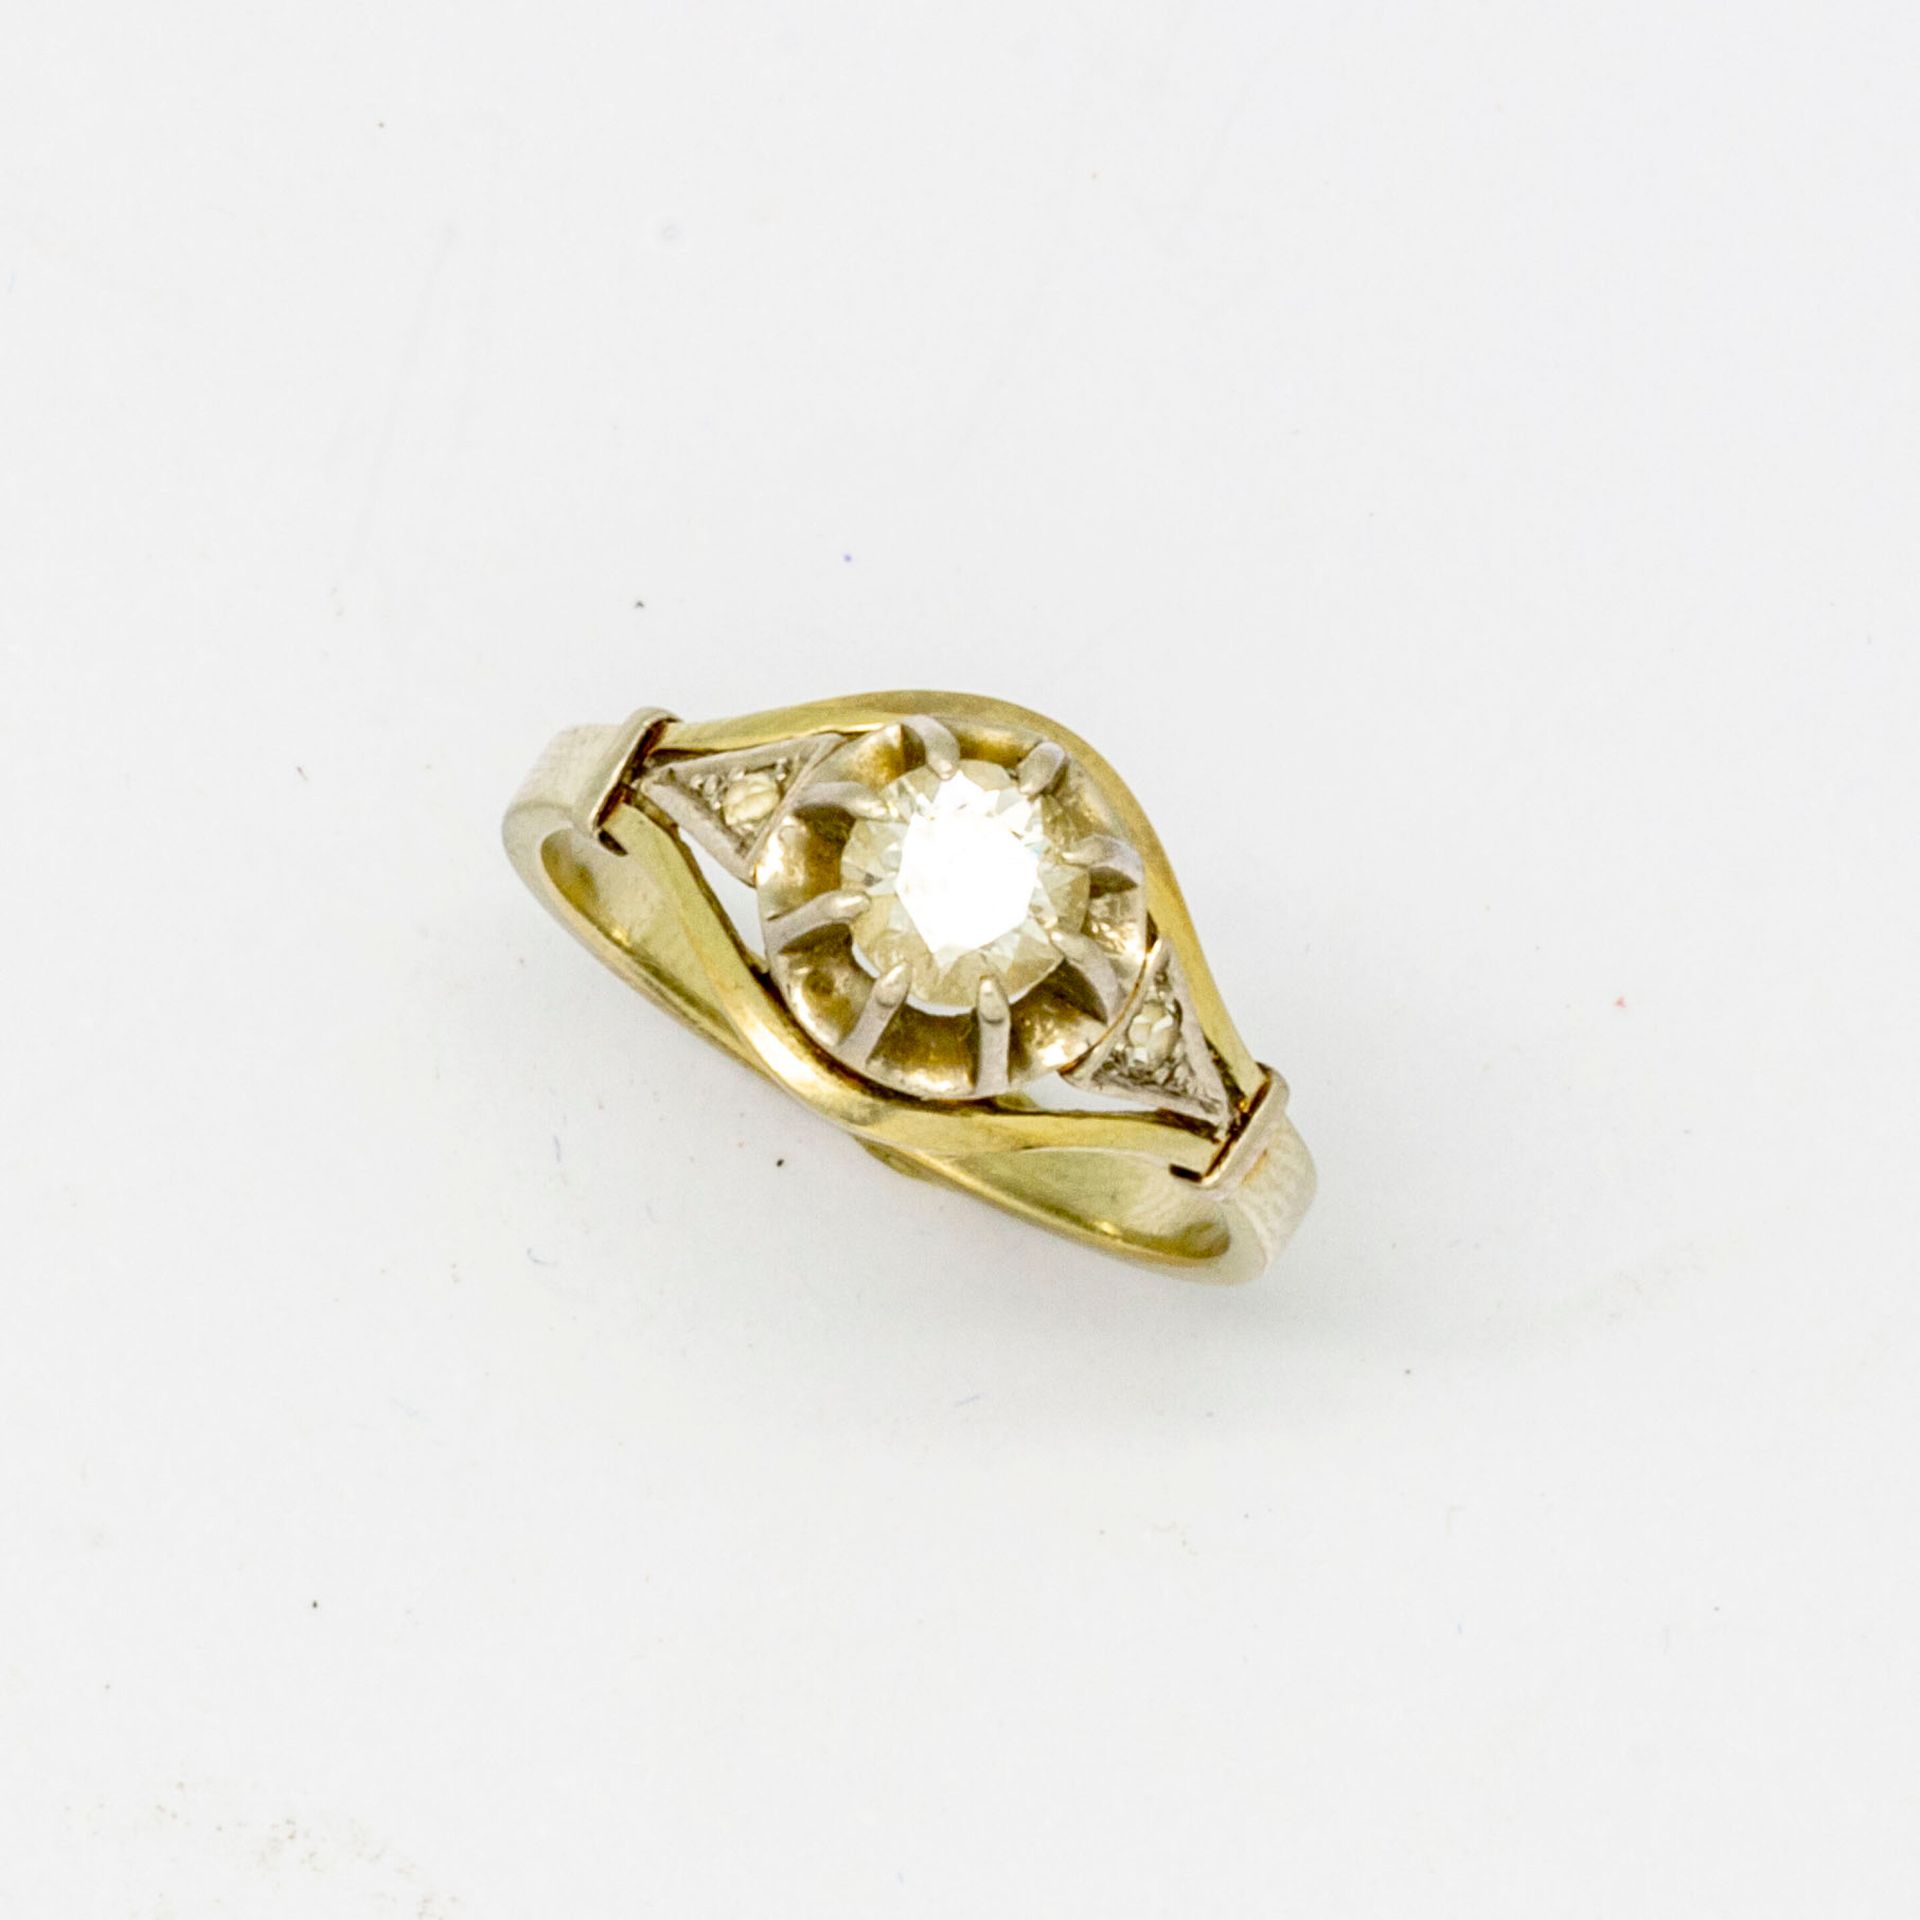 Null 18K白金戒指，镶嵌了一颗0.5克拉的钻石和小钻石。约1930/50年

重量：3.15克。